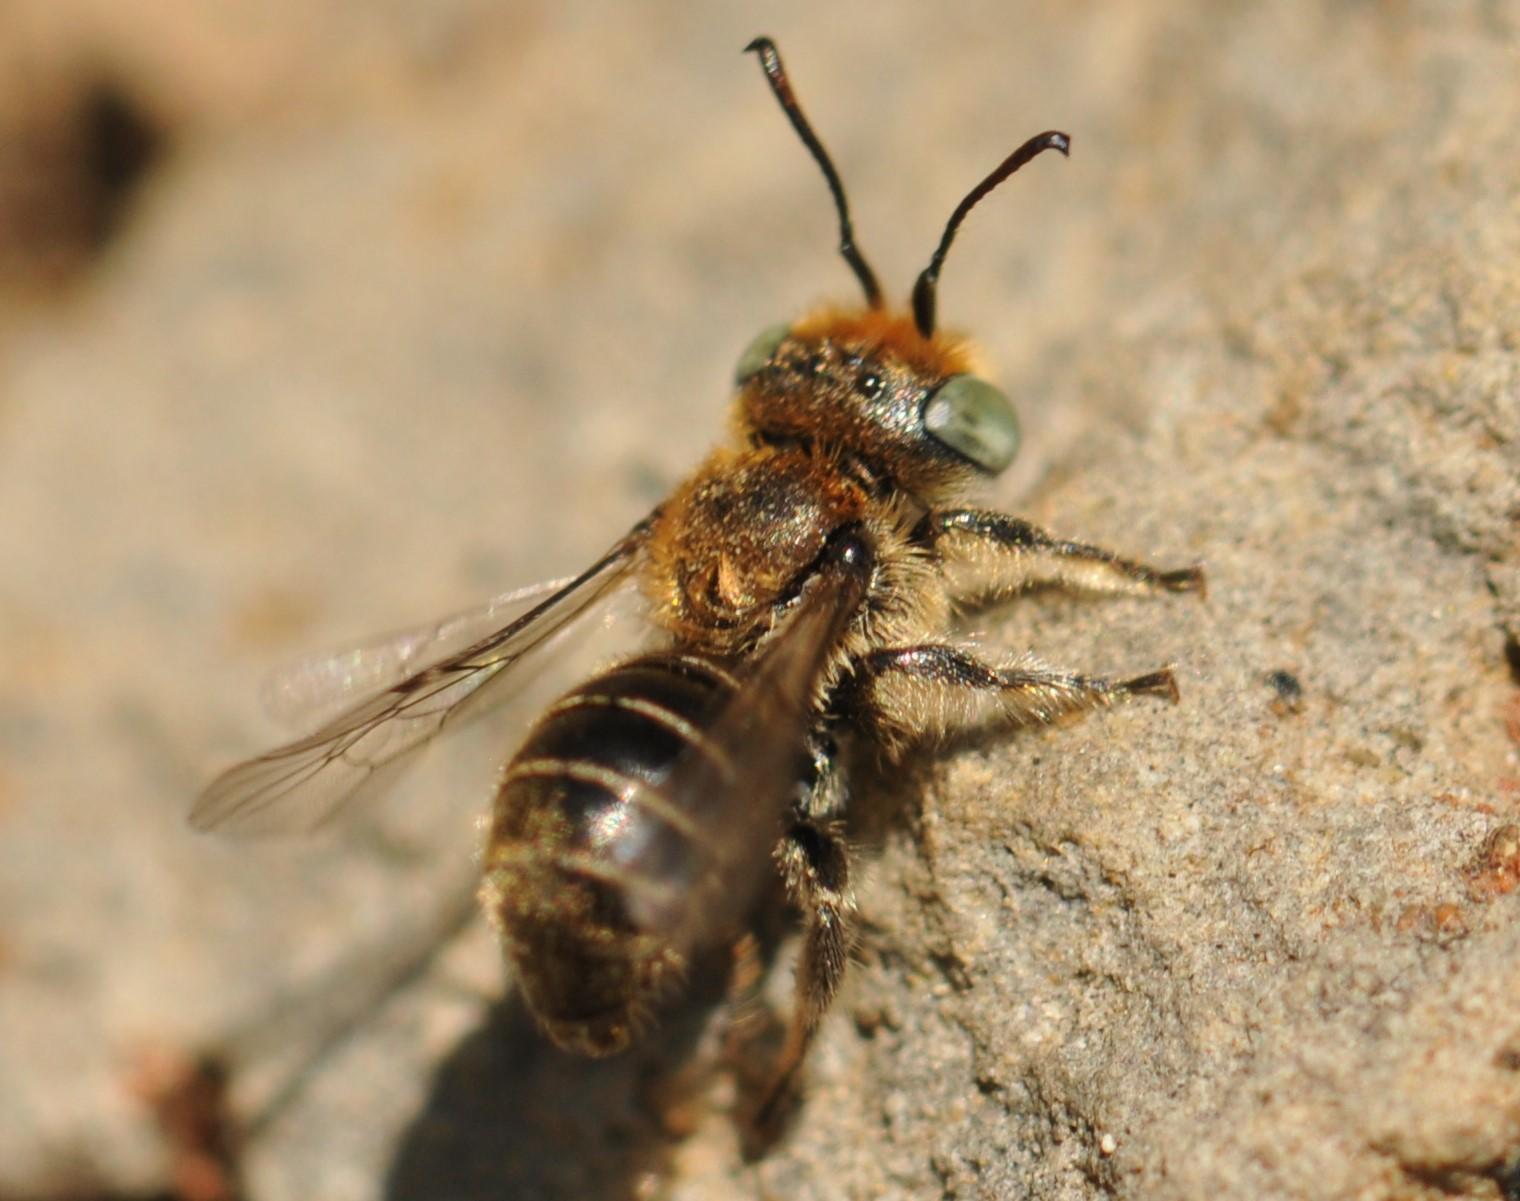 A closeup view of the small stonecrop mason bee.